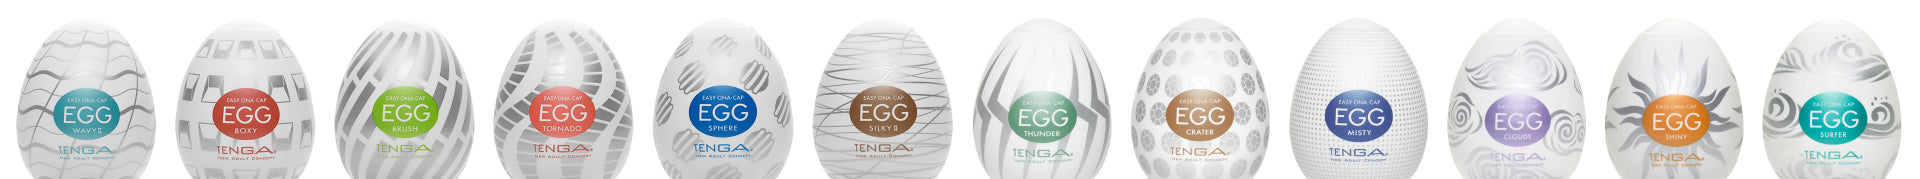 Shop JOUJOU: Tenga Egg Collection